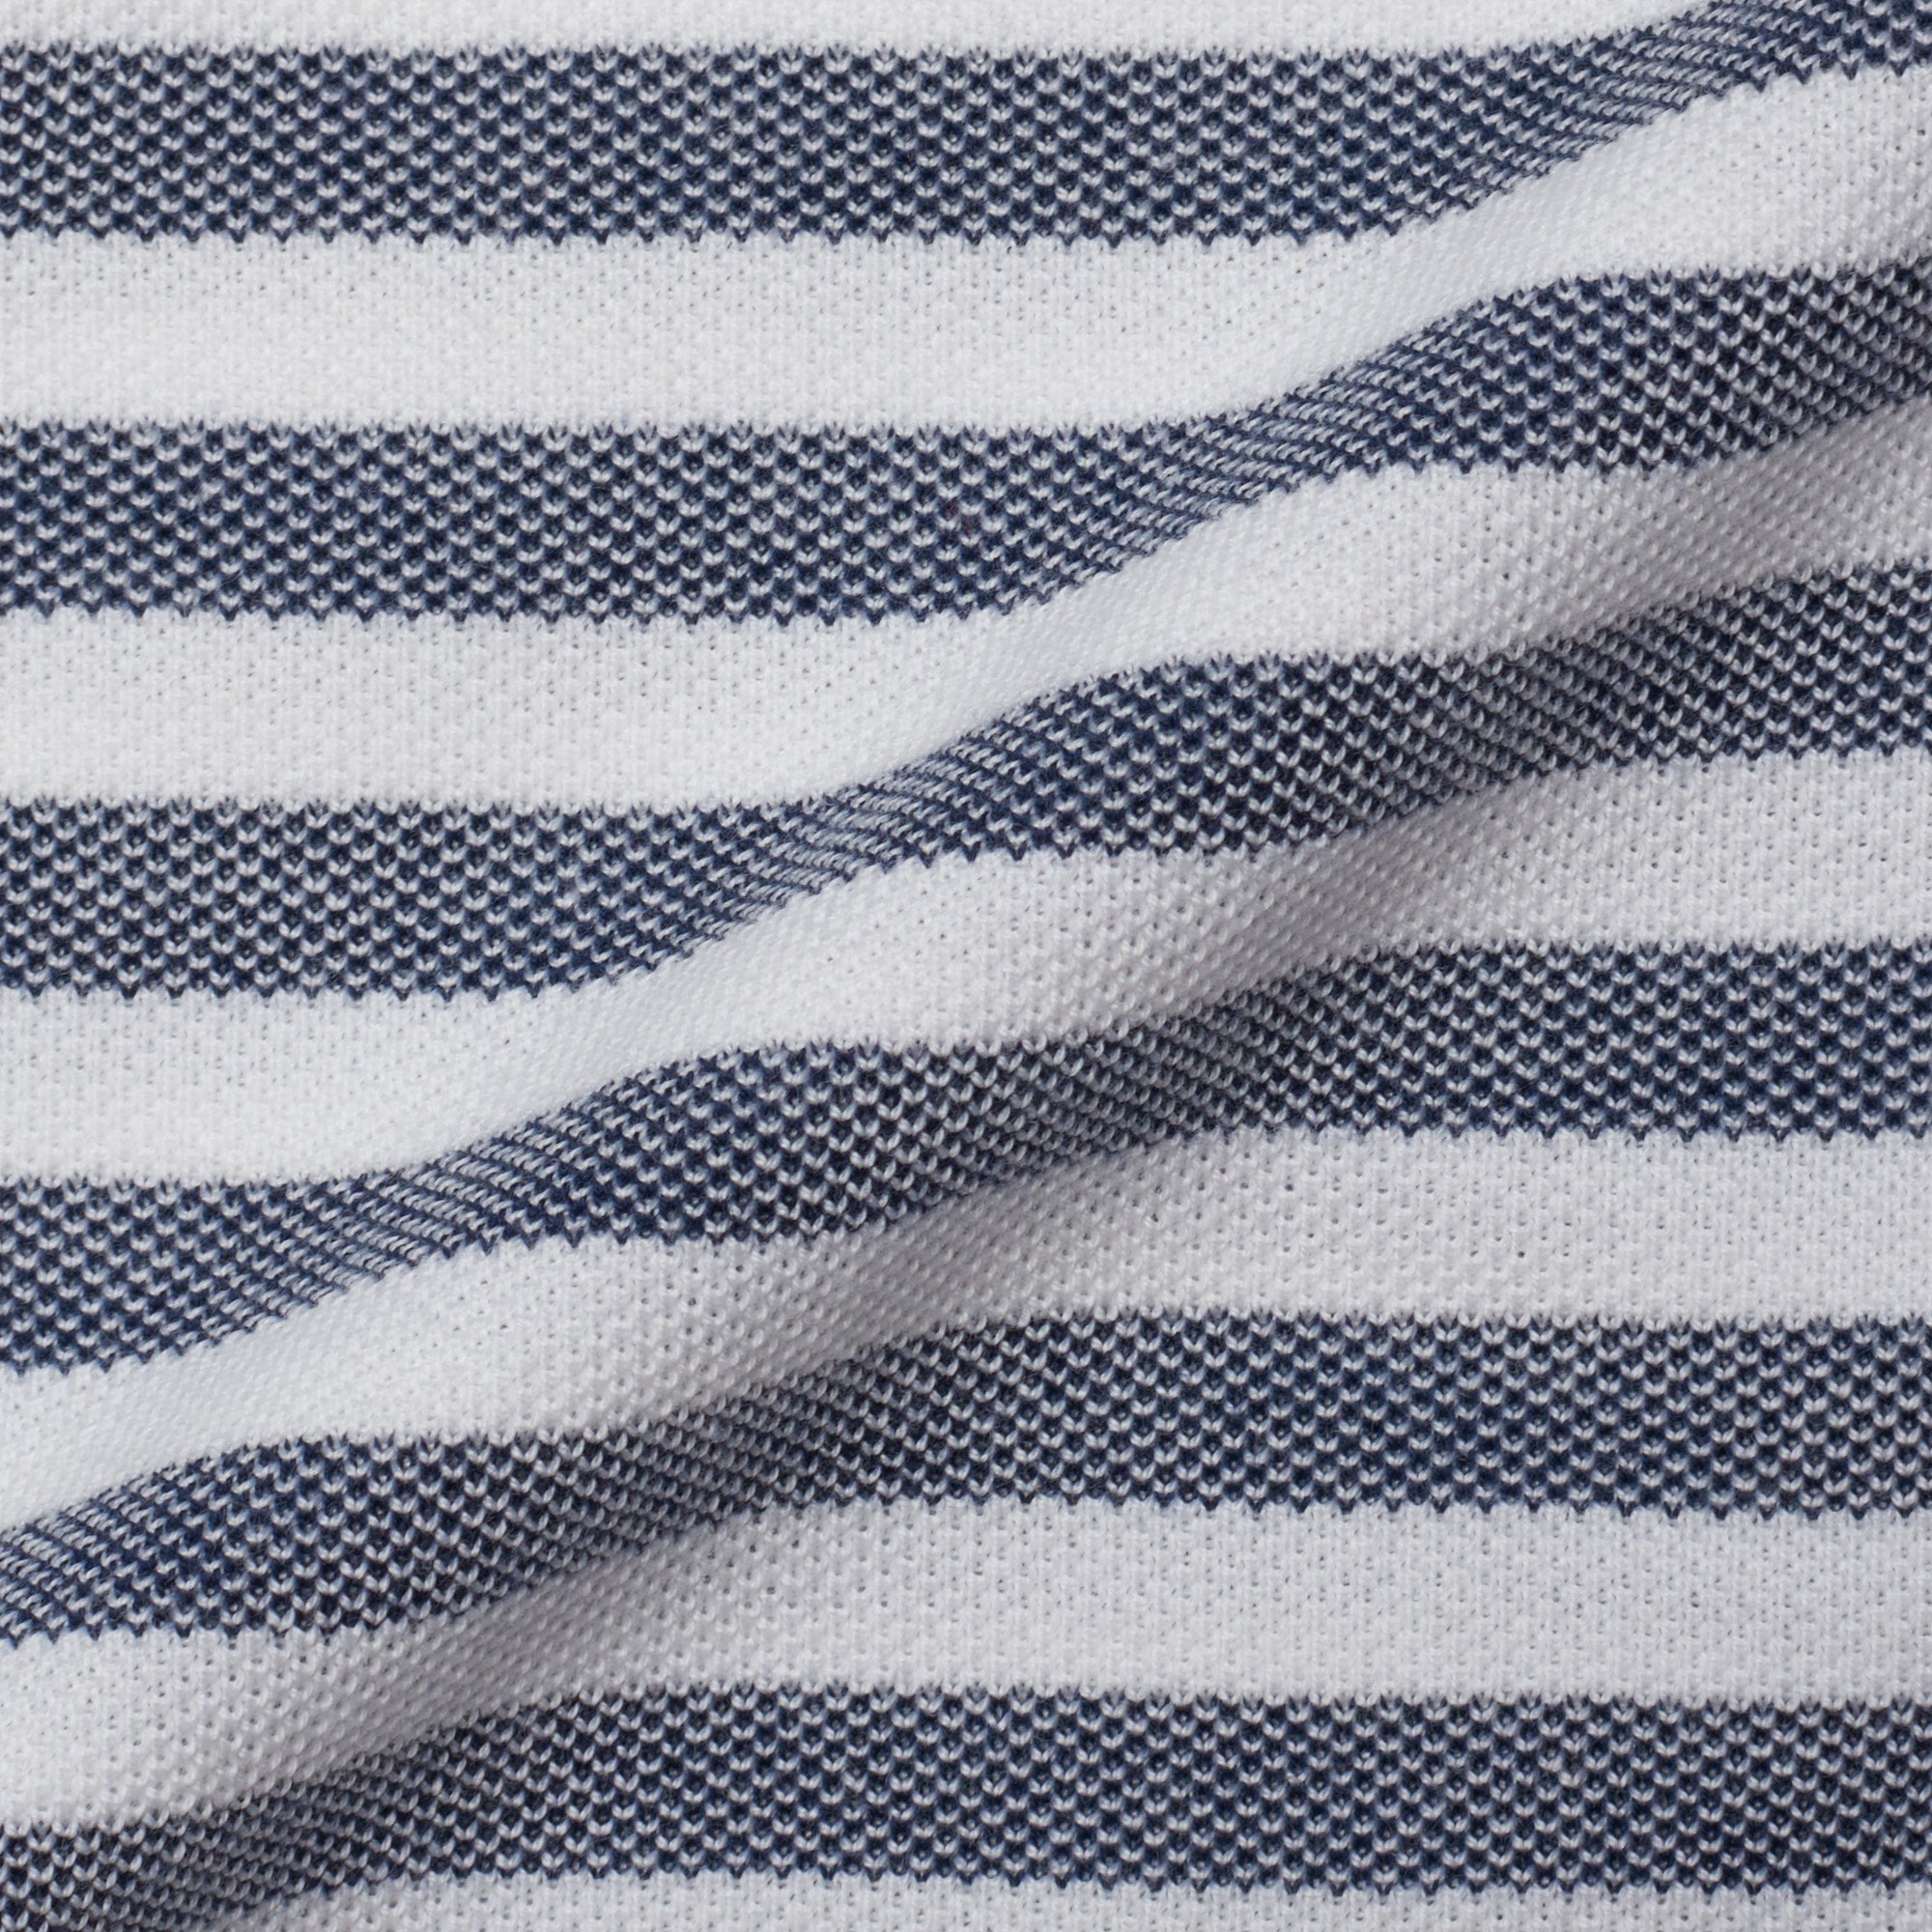 FEDELI Black Striped Cotton Light Pique Long Sleeve Polo Shirt NEW FEDELI